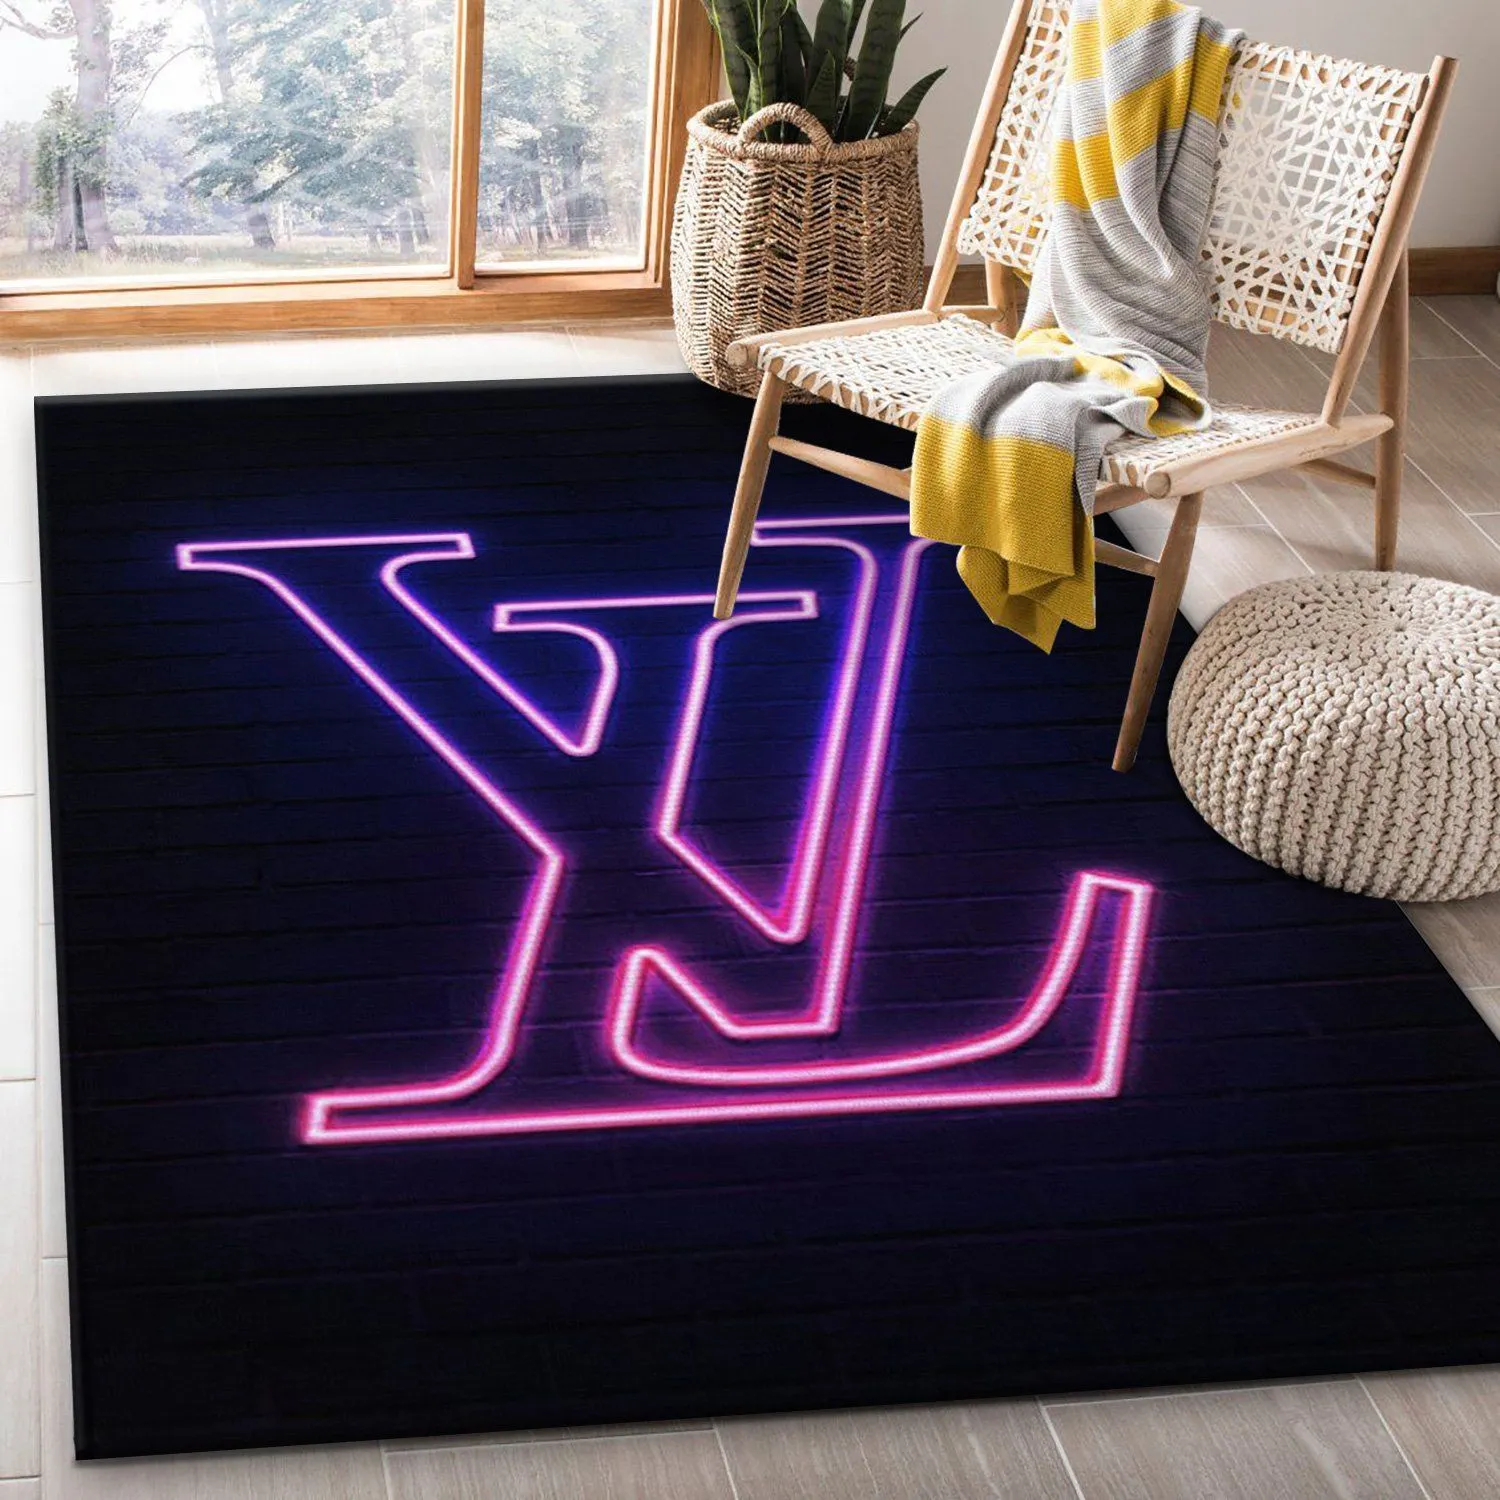 Louis Vuitton Neon Luxury Fashion Brand Rug Door Mat Home Decor Area Carpet